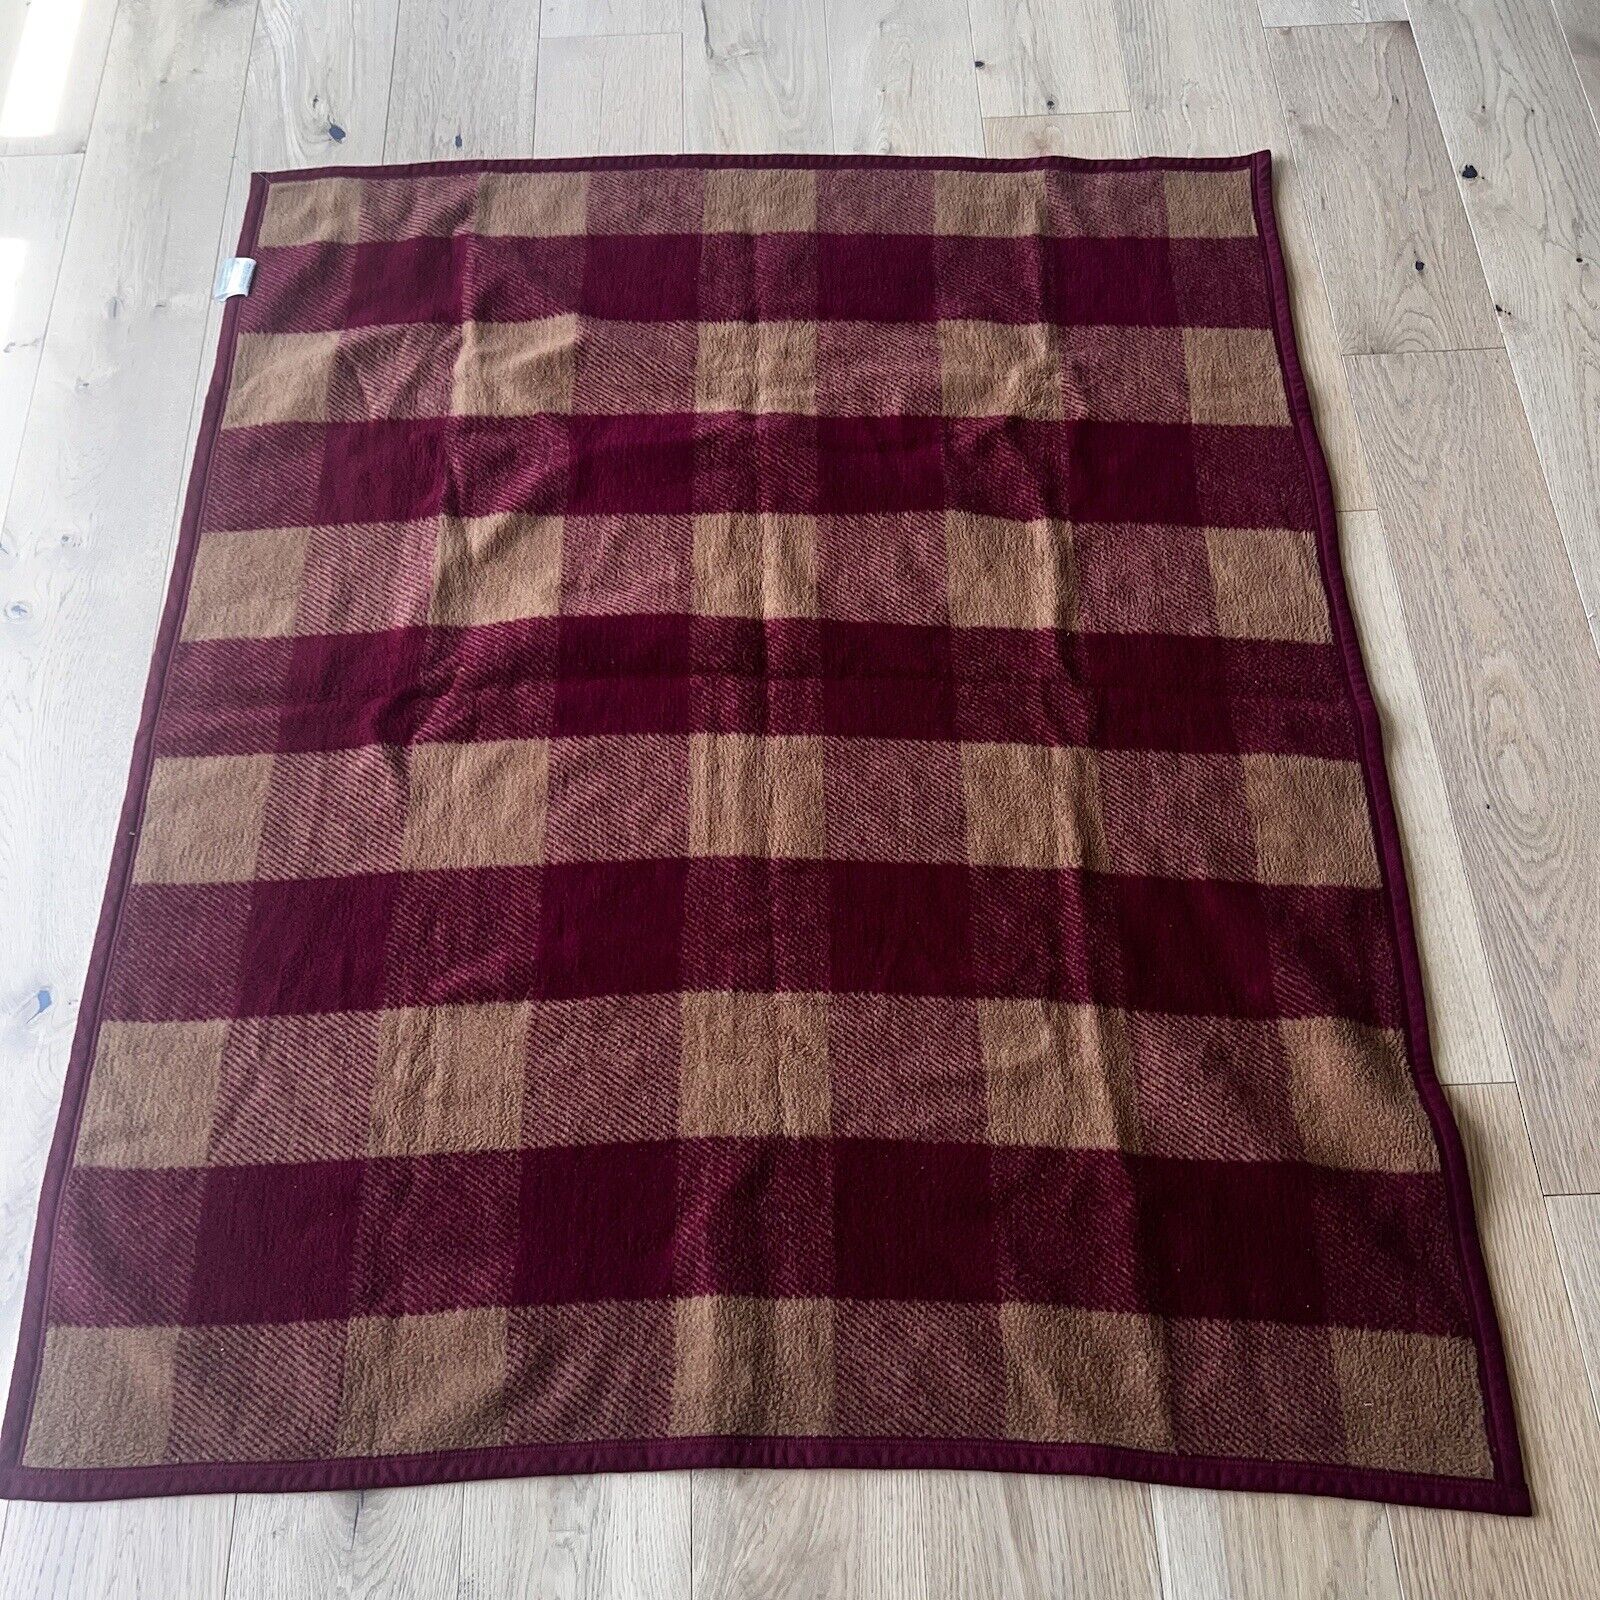 Biederlack Aurora Blanket Plaid Throw Biederlack of Americas 56 length 46”width